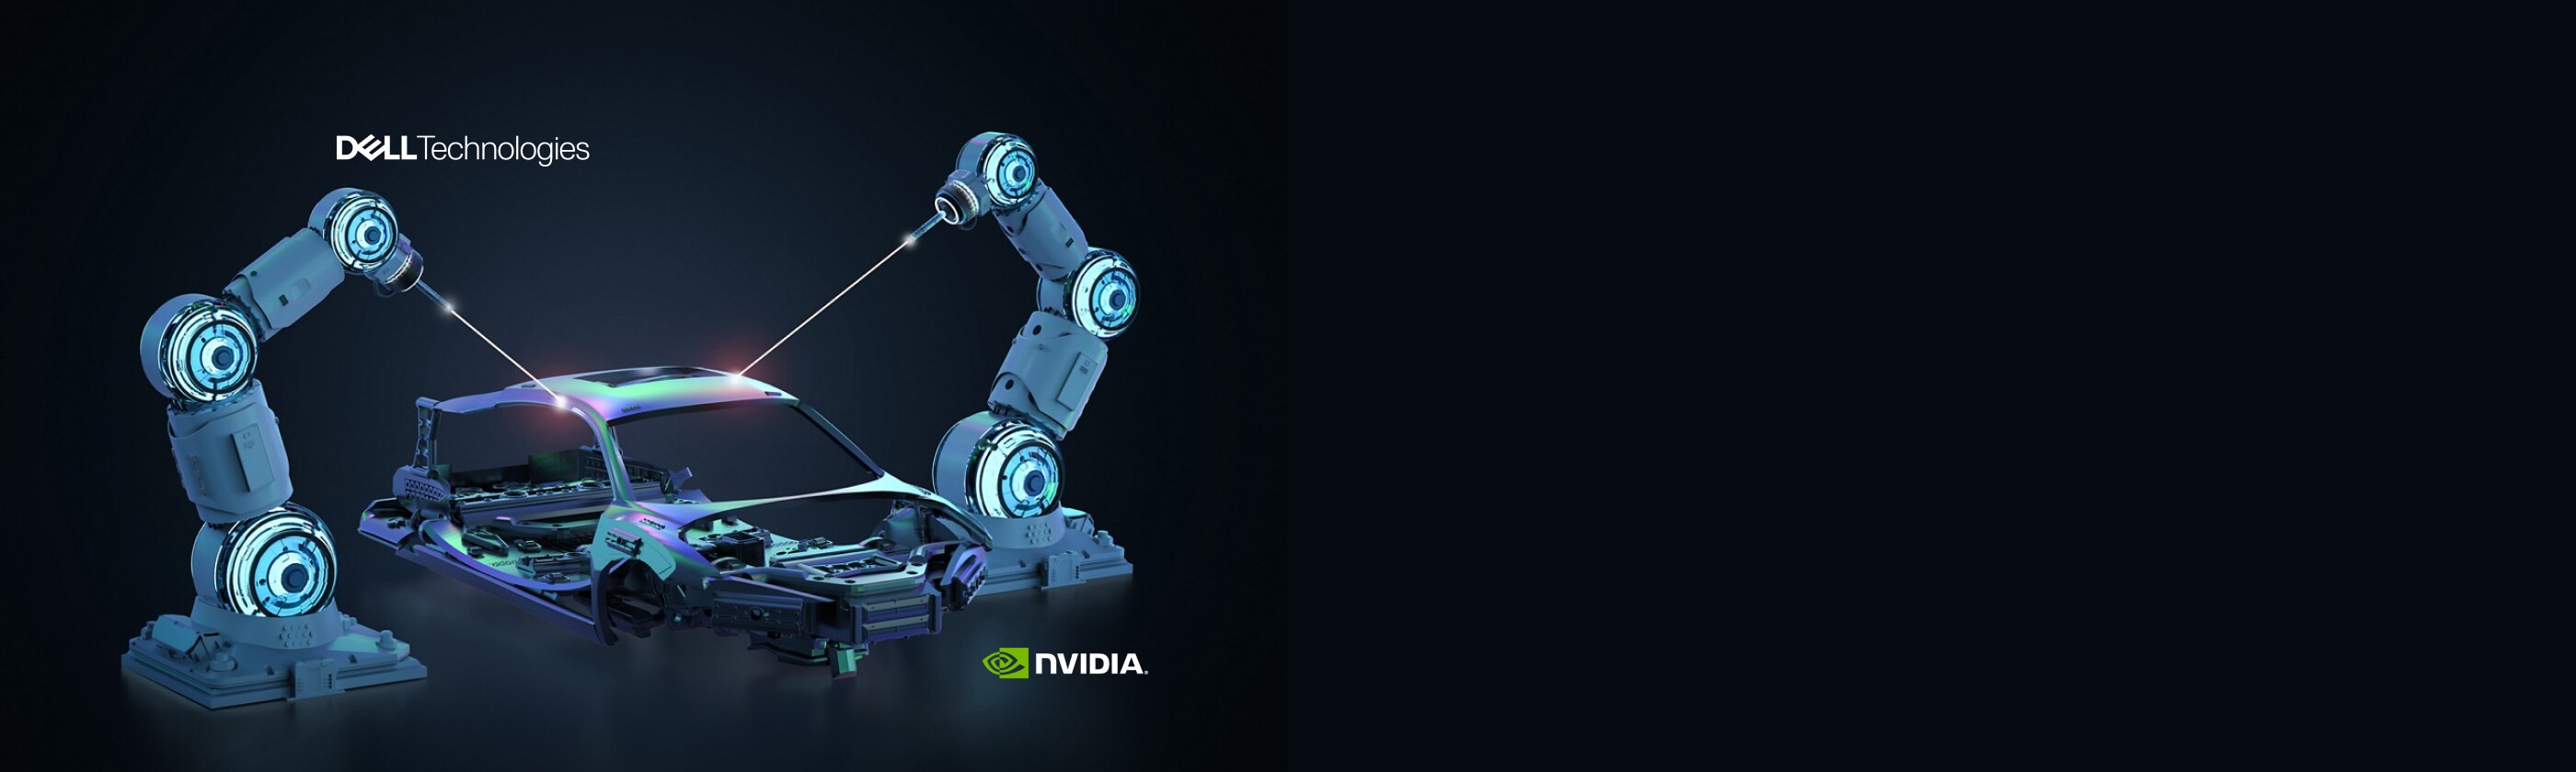 nvidia-omniverse-desktop-banner